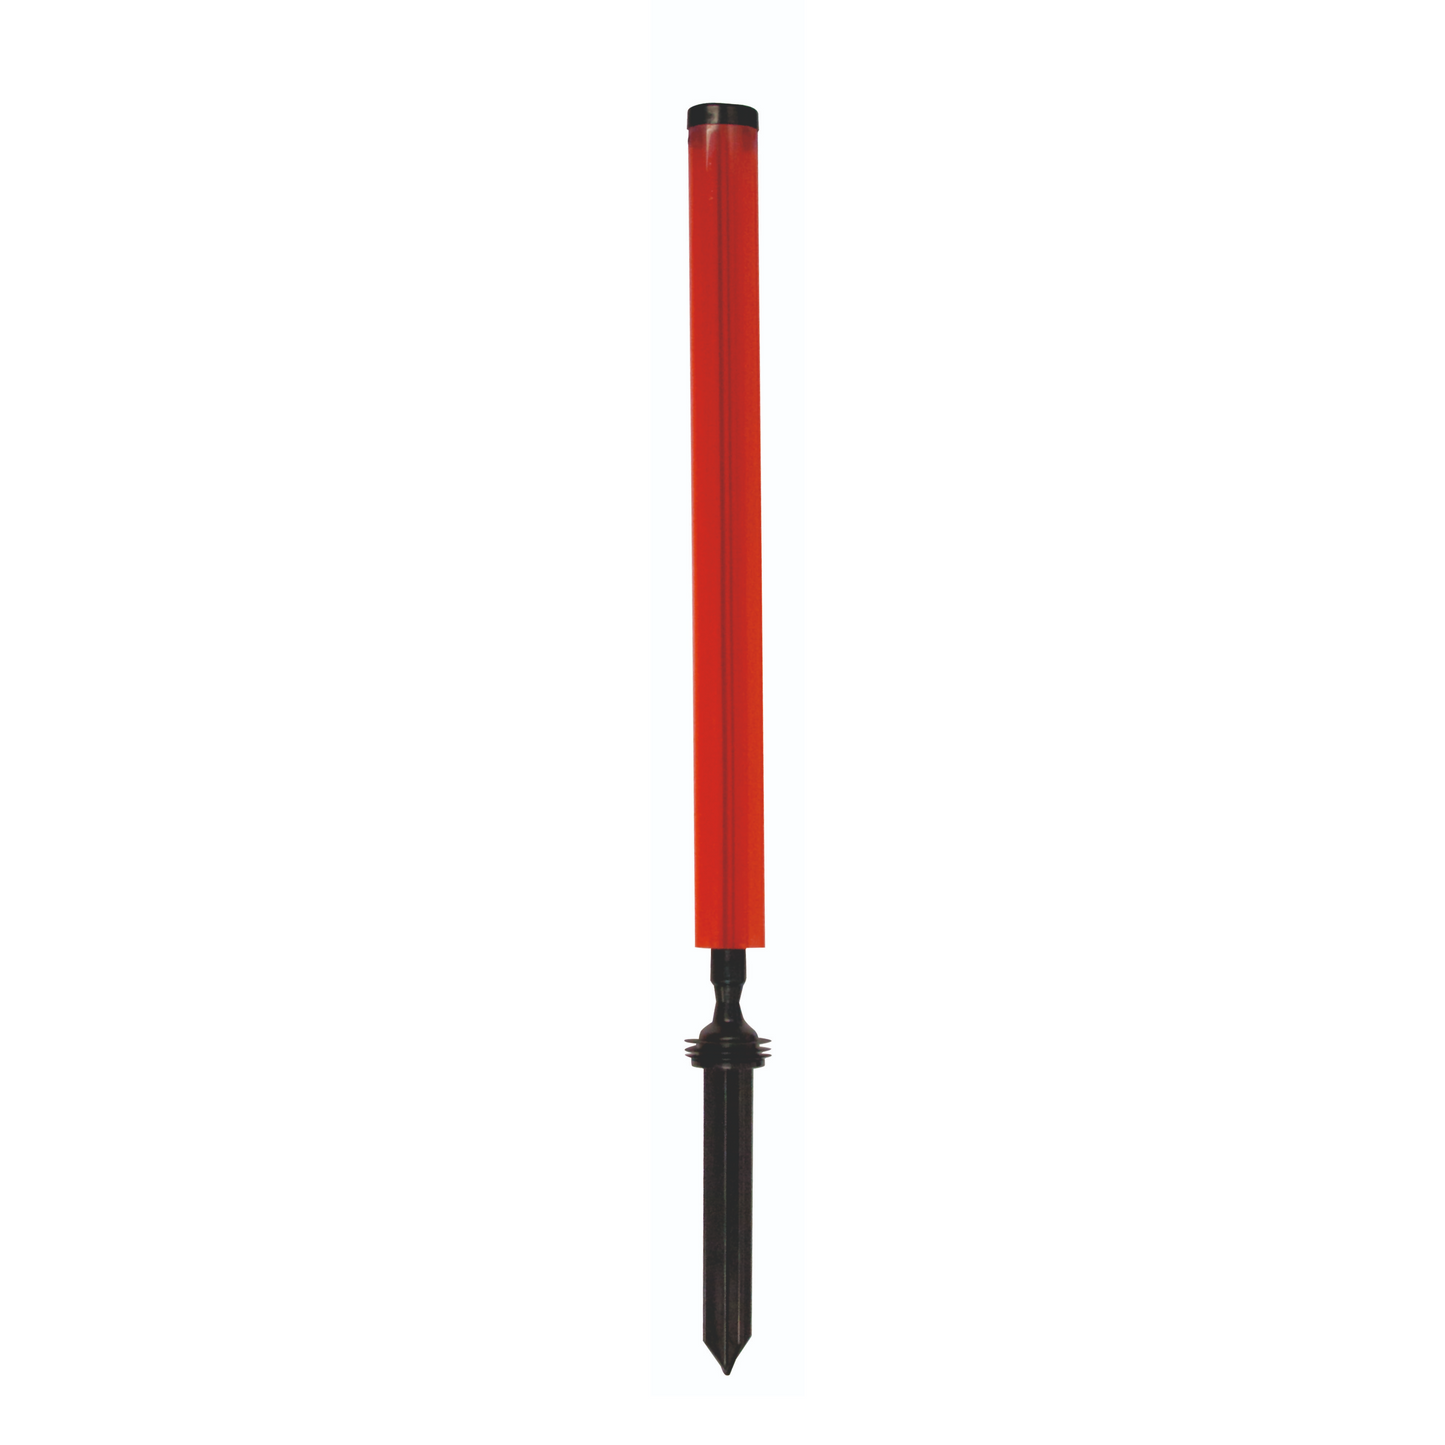 Flexible marking pole, red